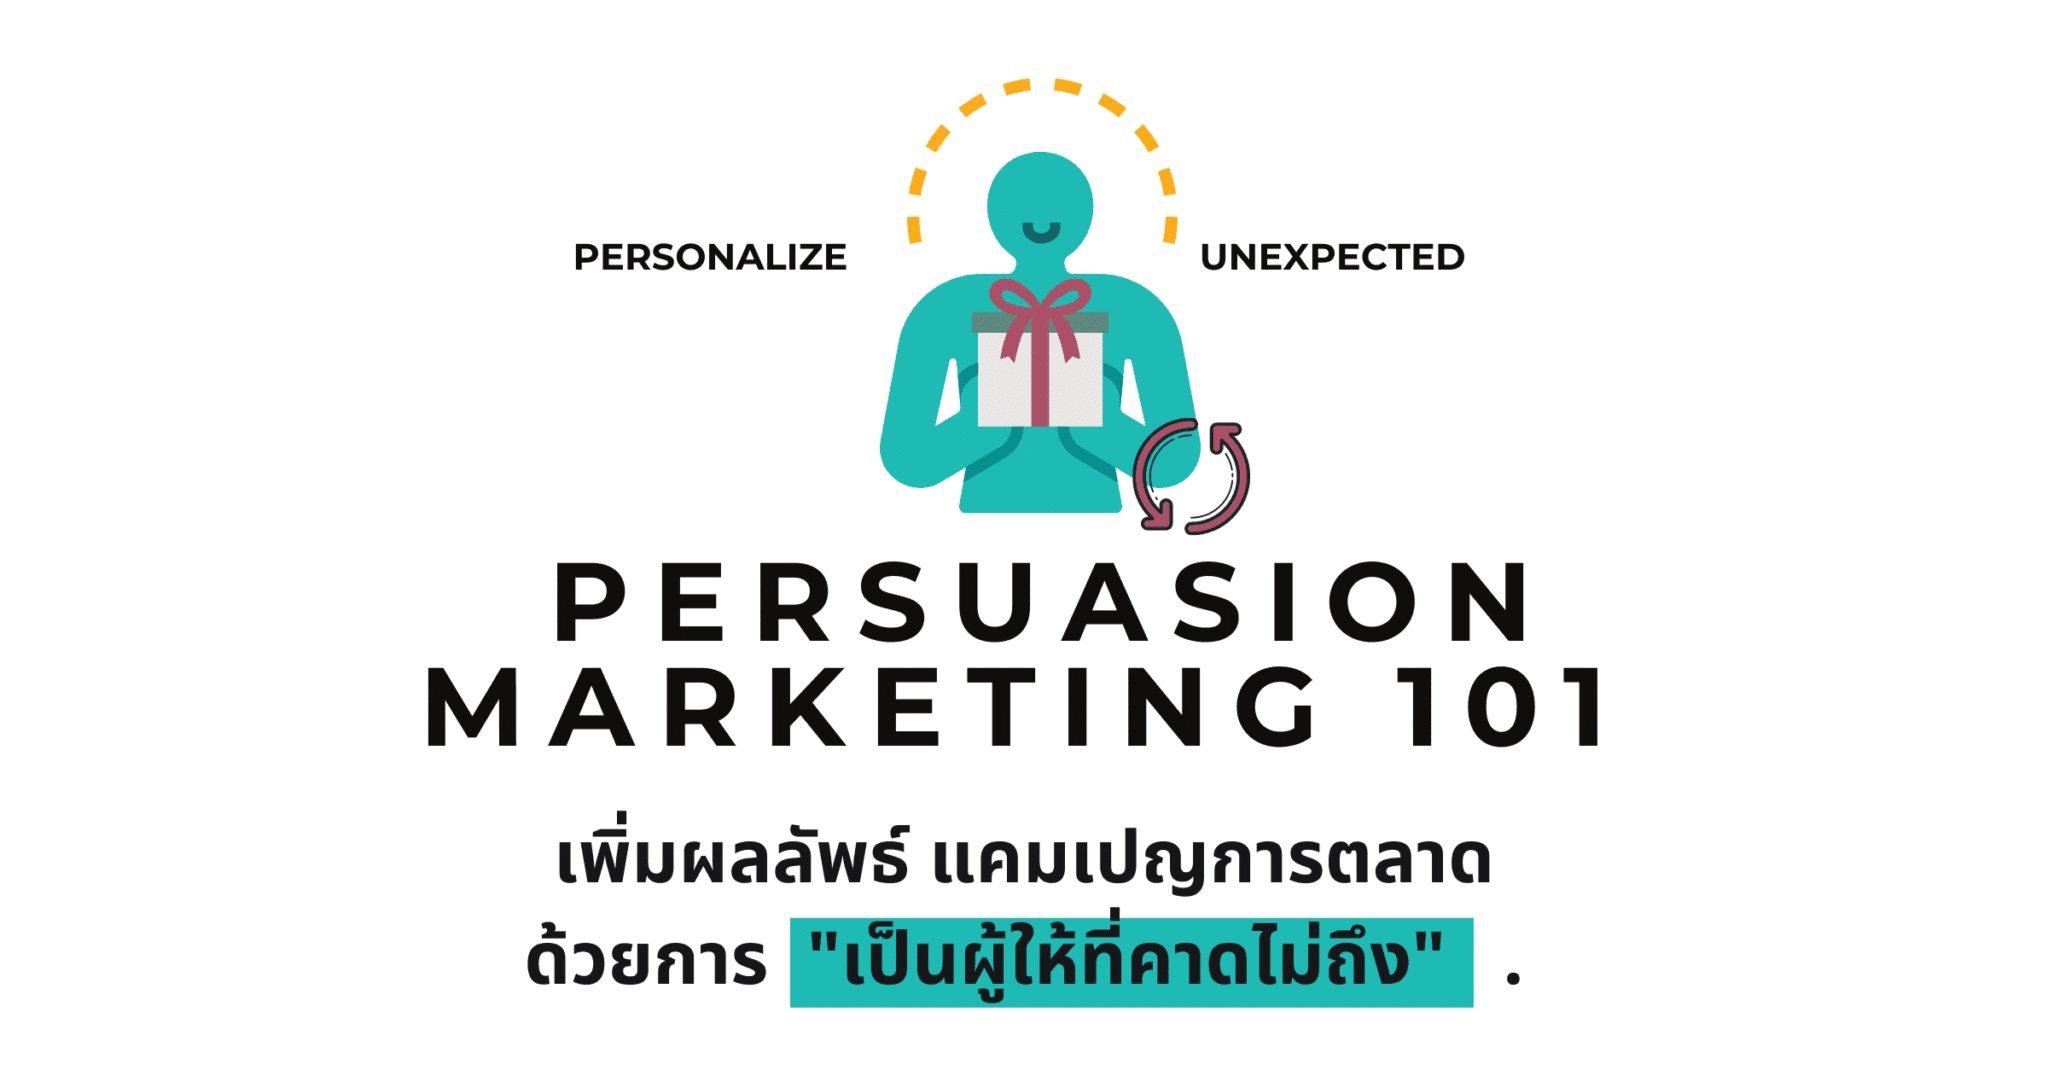 Persuasion Marketing การตลาดโน้มน้าวใจ เพิ่มผลลัพธ์ที่ดีจากการให้ที่คาดไม่ถึง